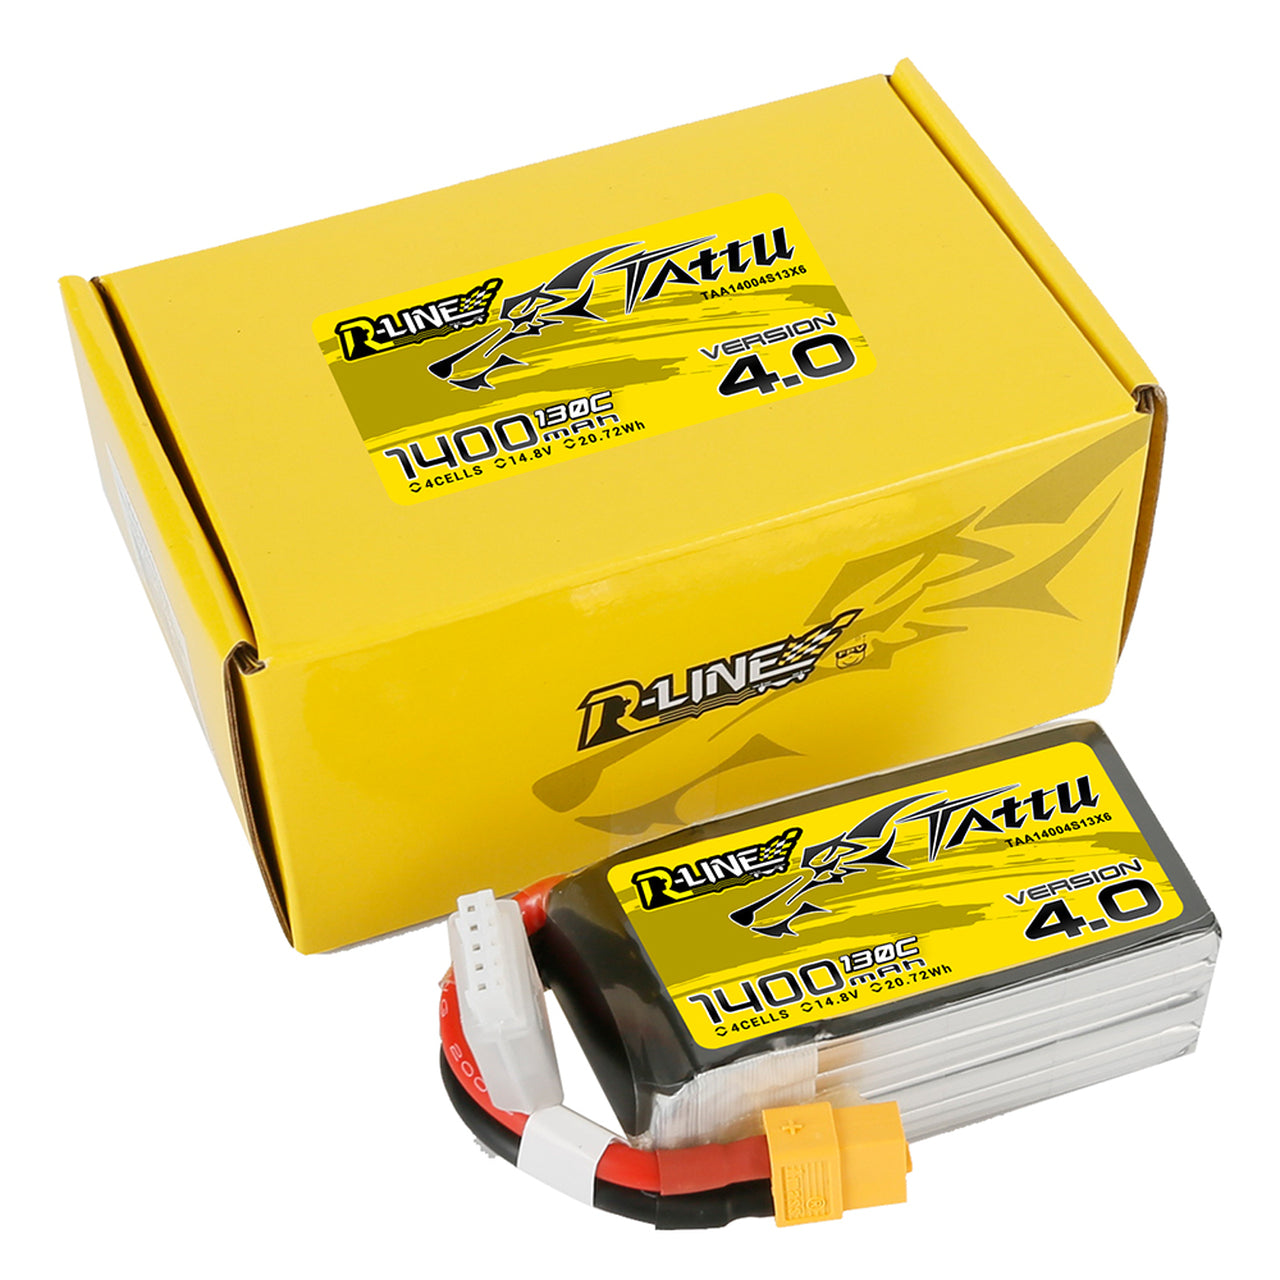 Tattu R-Line Version 4.0 1400mAh 14.8V 130C 4S1P Lipo Battery Pack With XT60 Plug - DroneDynamics.ca